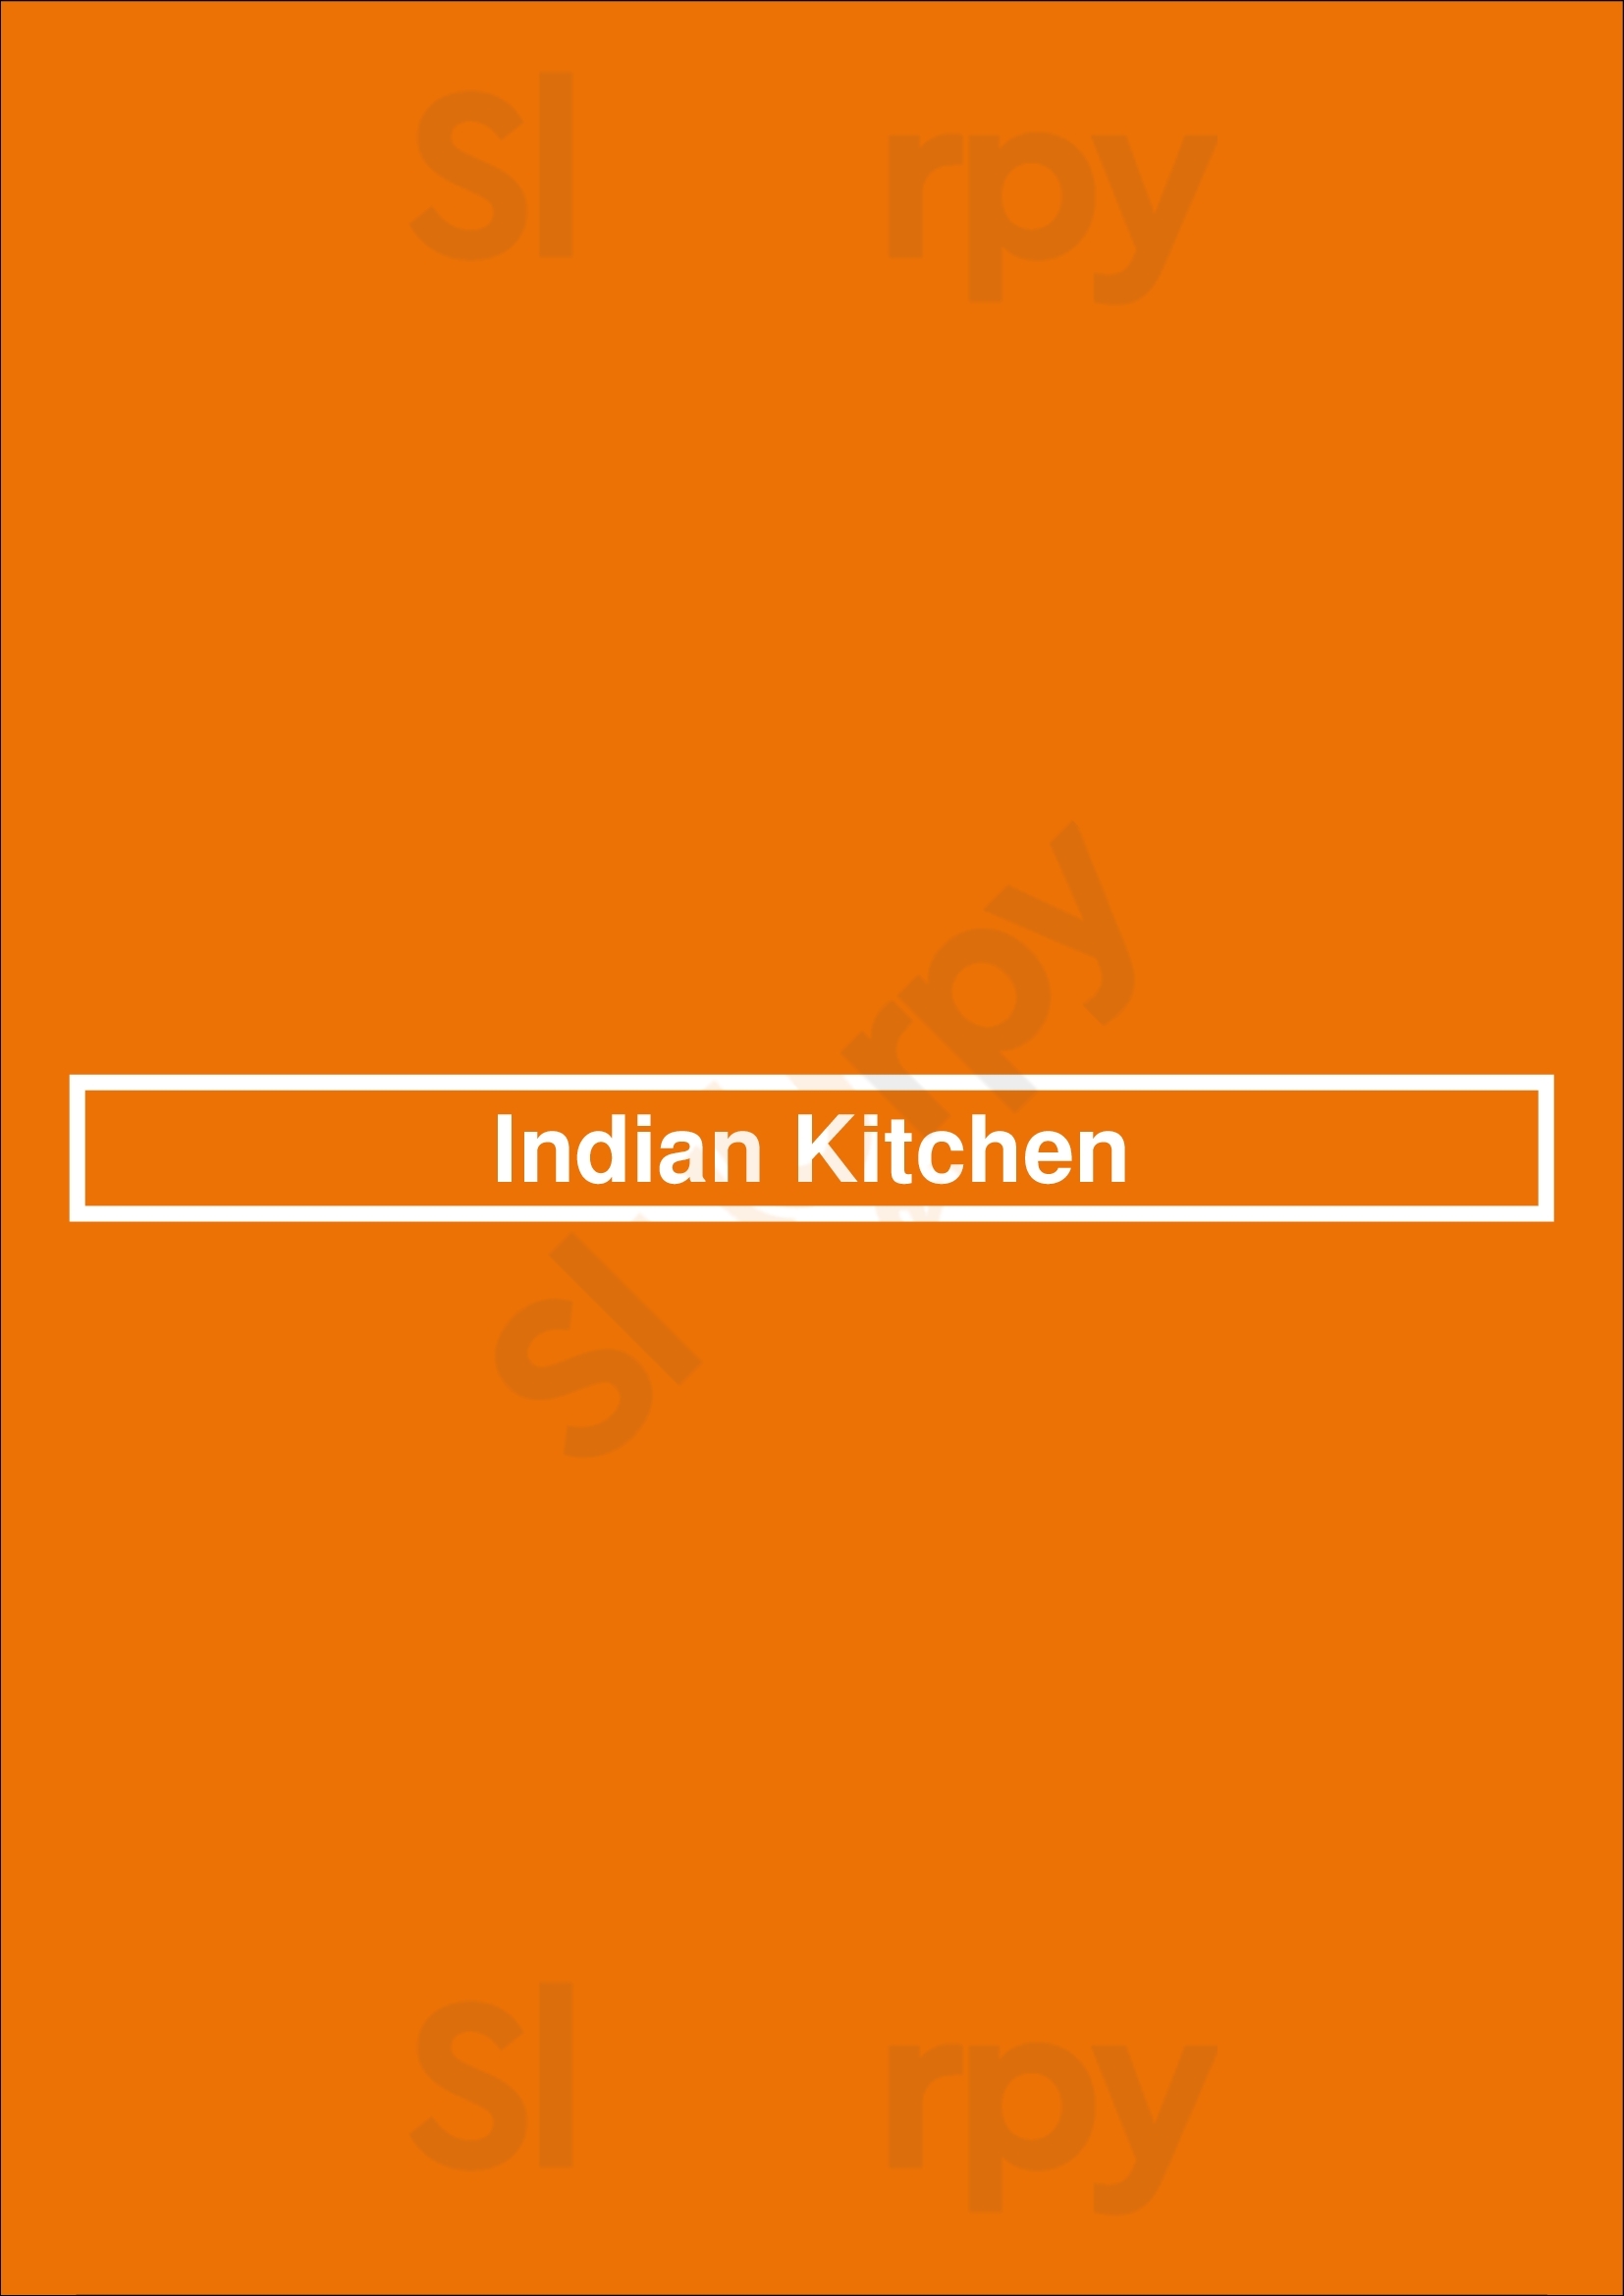 Indian Kitchen Red Deer Menu - 1